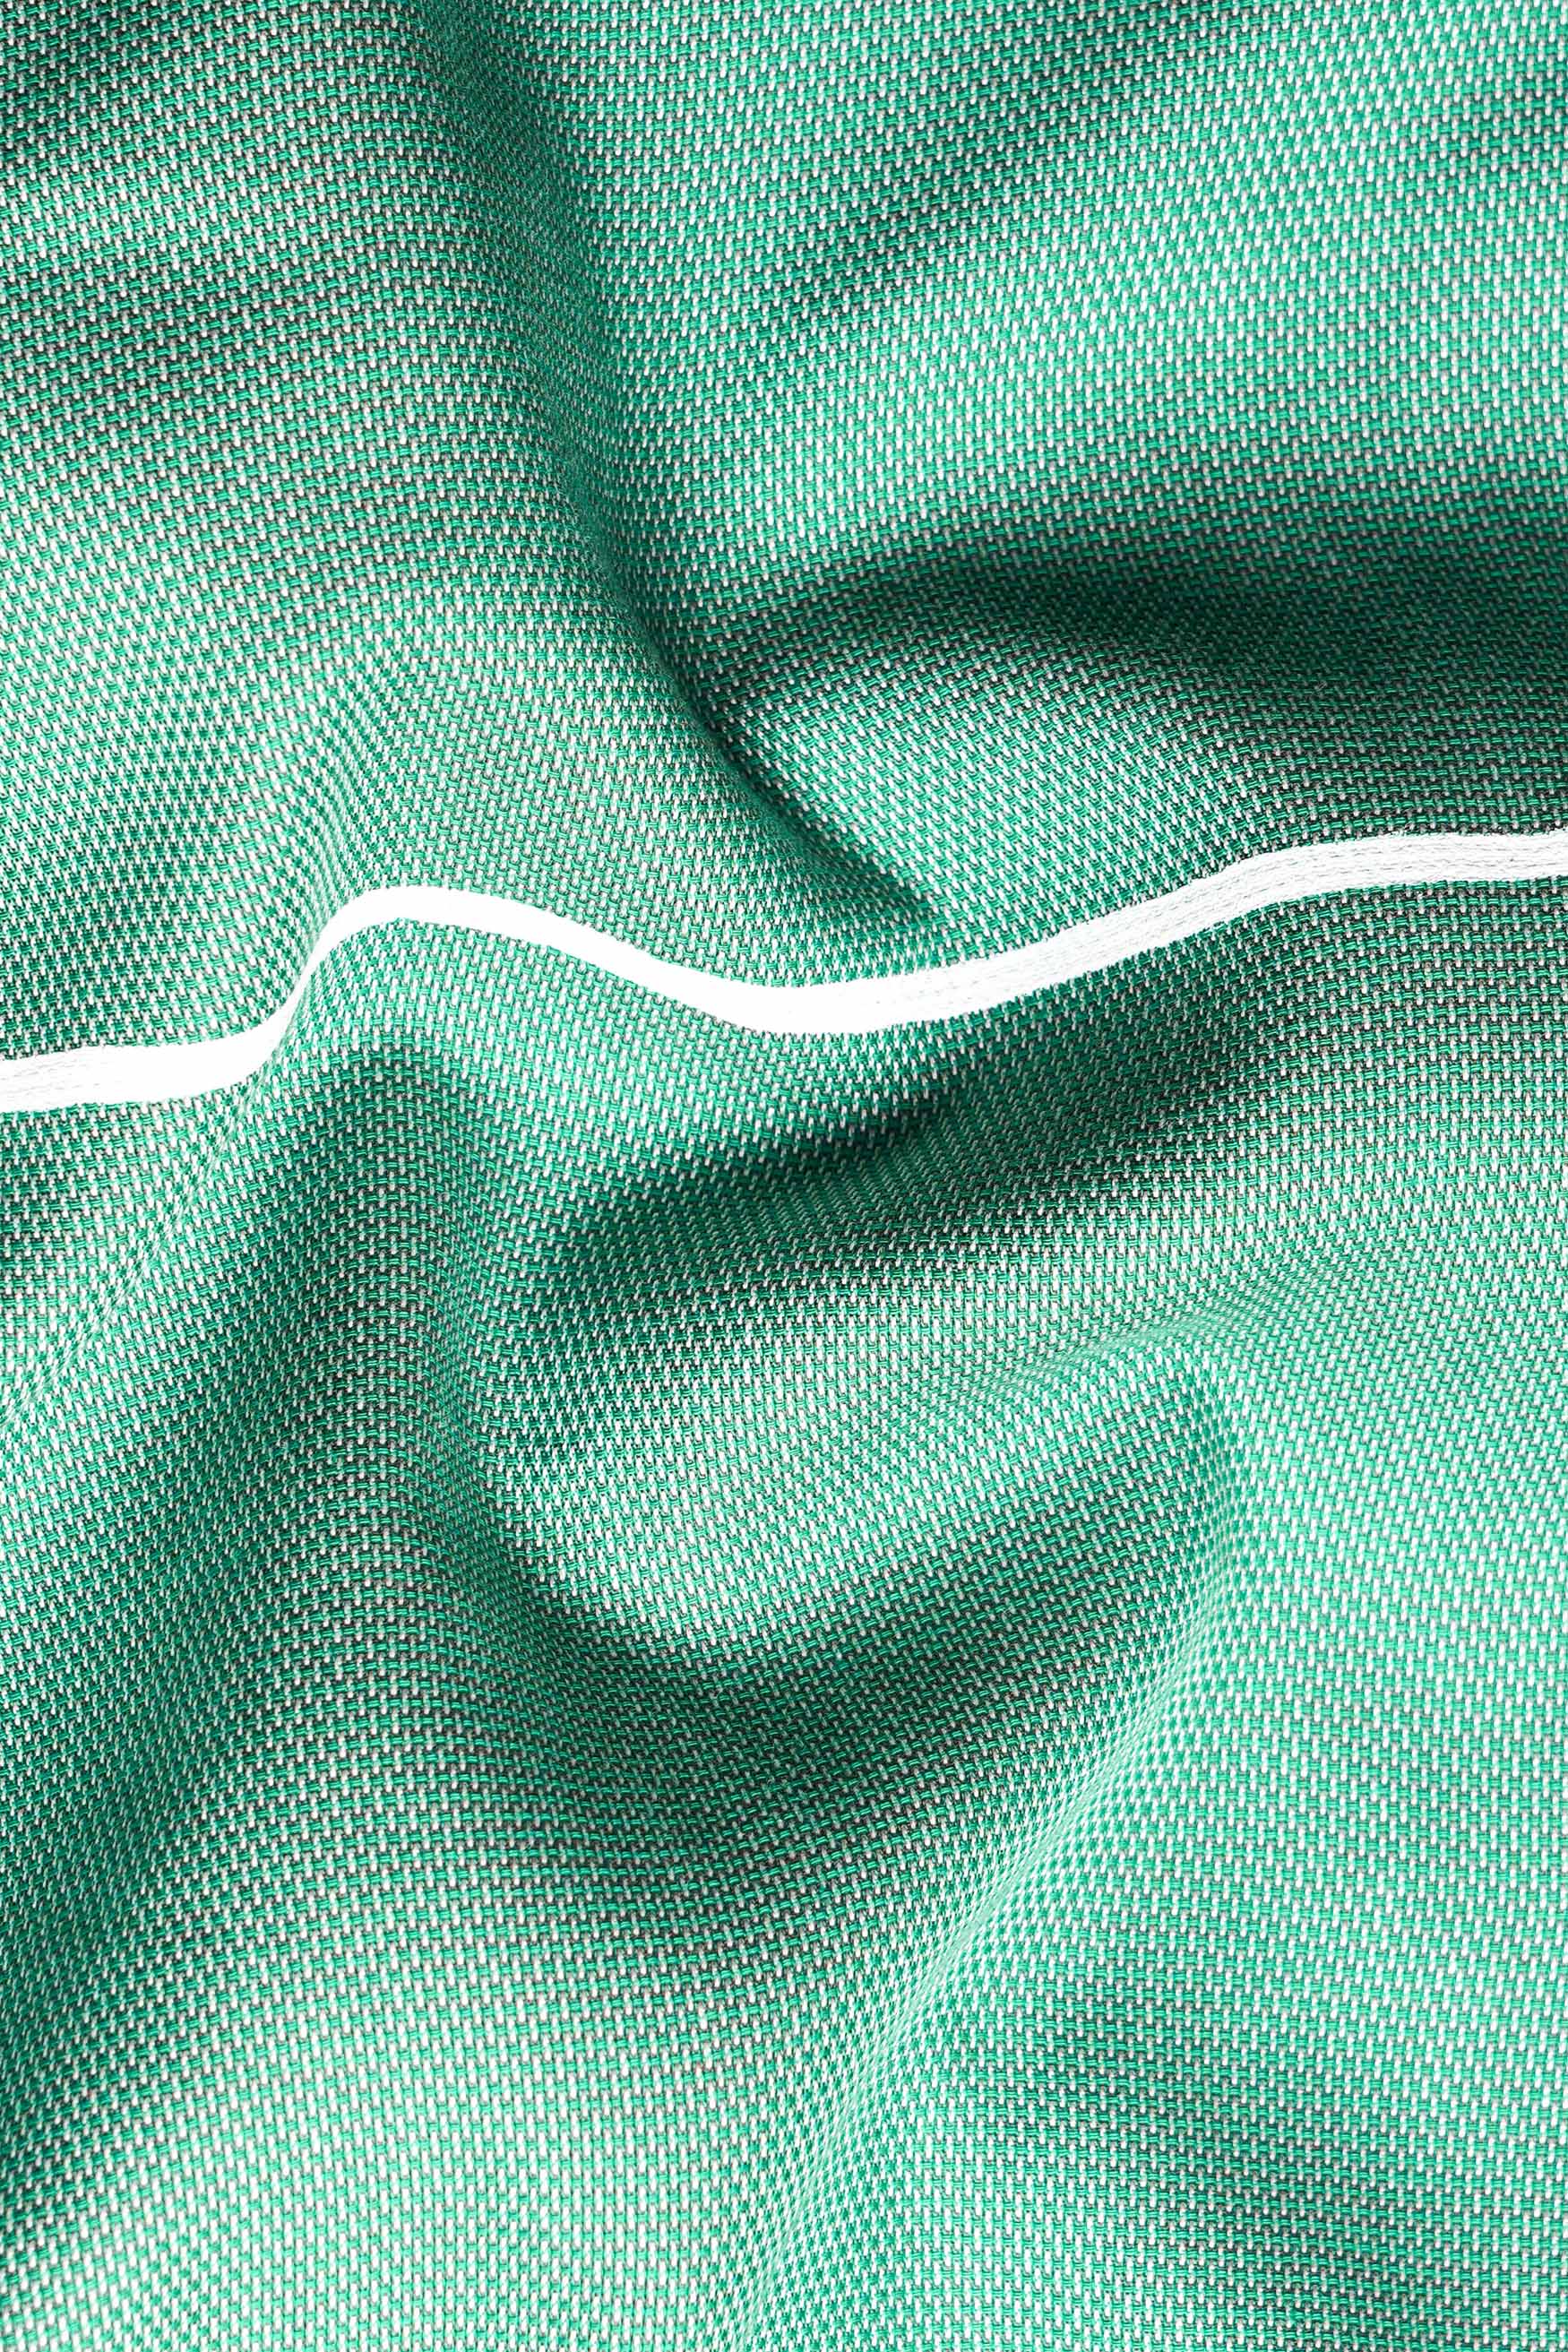 Seafom Green Hand Painted Dobby Textured Premium Giza Cotton Designer Shirt 6490-CA-ART-38, 6490-CA-ART-H-38, 6490-CA-ART-39, 6490-CA-ART-H-39, 6490-CA-ART-40, 6490-CA-ART-H-40, 6490-CA-ART-42, 6490-CA-ART-H-42, 6490-CA-ART-44, 6490-CA-ART-H-44, 6490-CA-ART-46, 6490-CA-ART-H-46, 6490-CA-ART-48, 6490-CA-ART-H-48, 6490-CA-ART-50, 6490-CA-ART-H-50, 6490-CA-ART-52, 6490-CA-ART-H-52